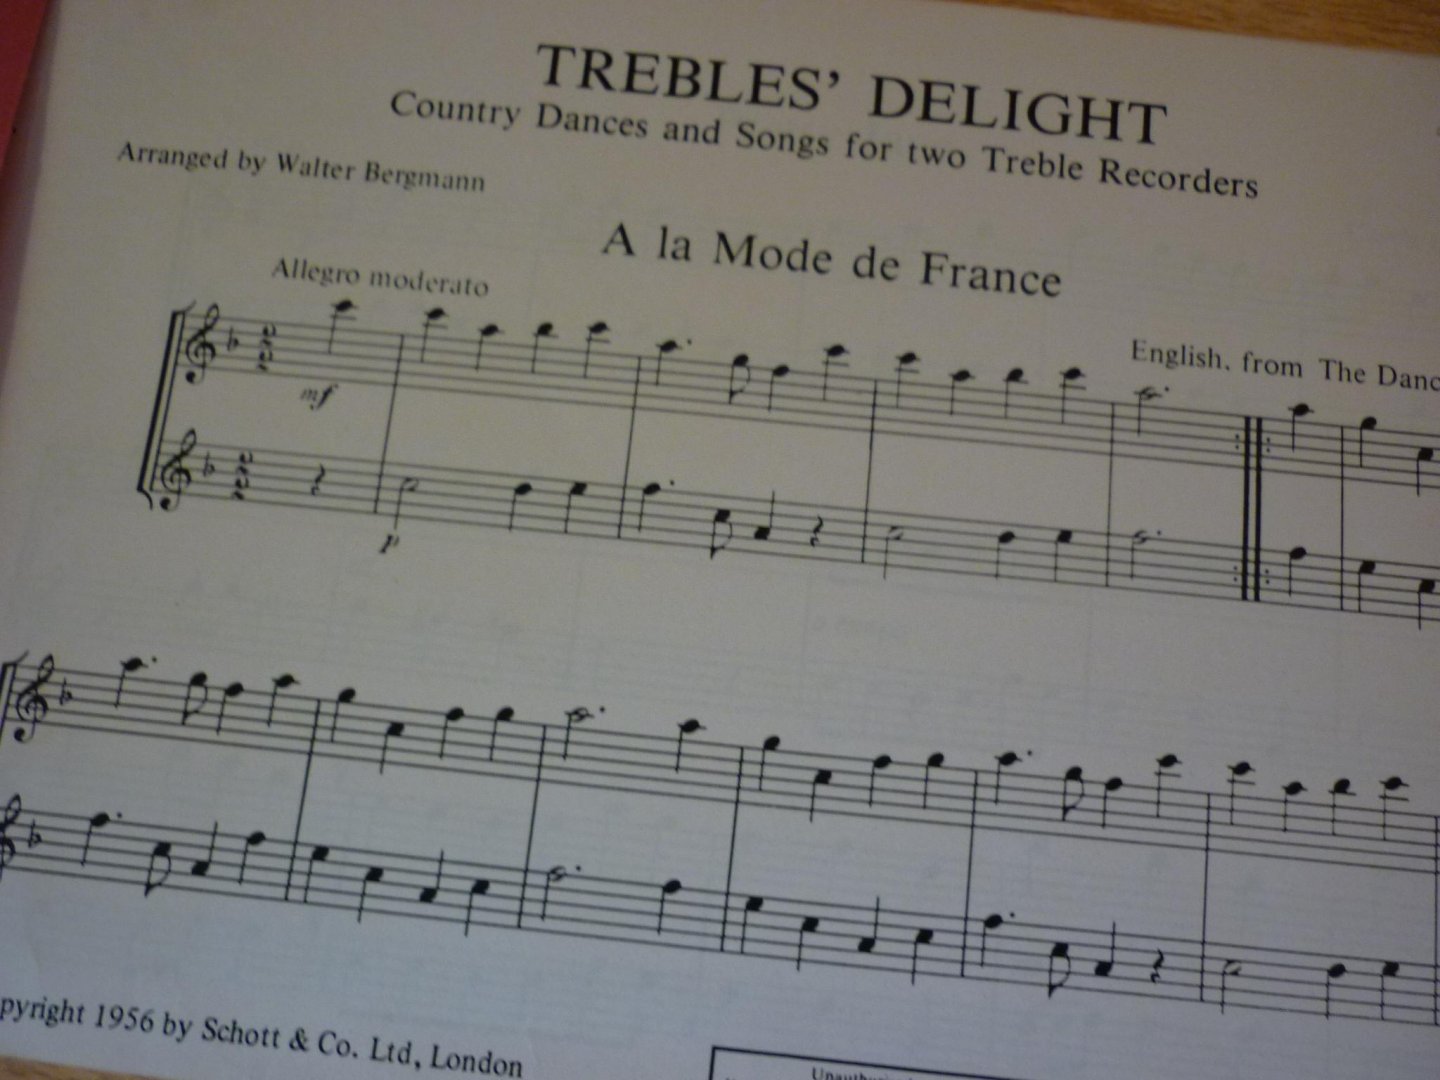 Bregmann, Walter - Trebles’Delight